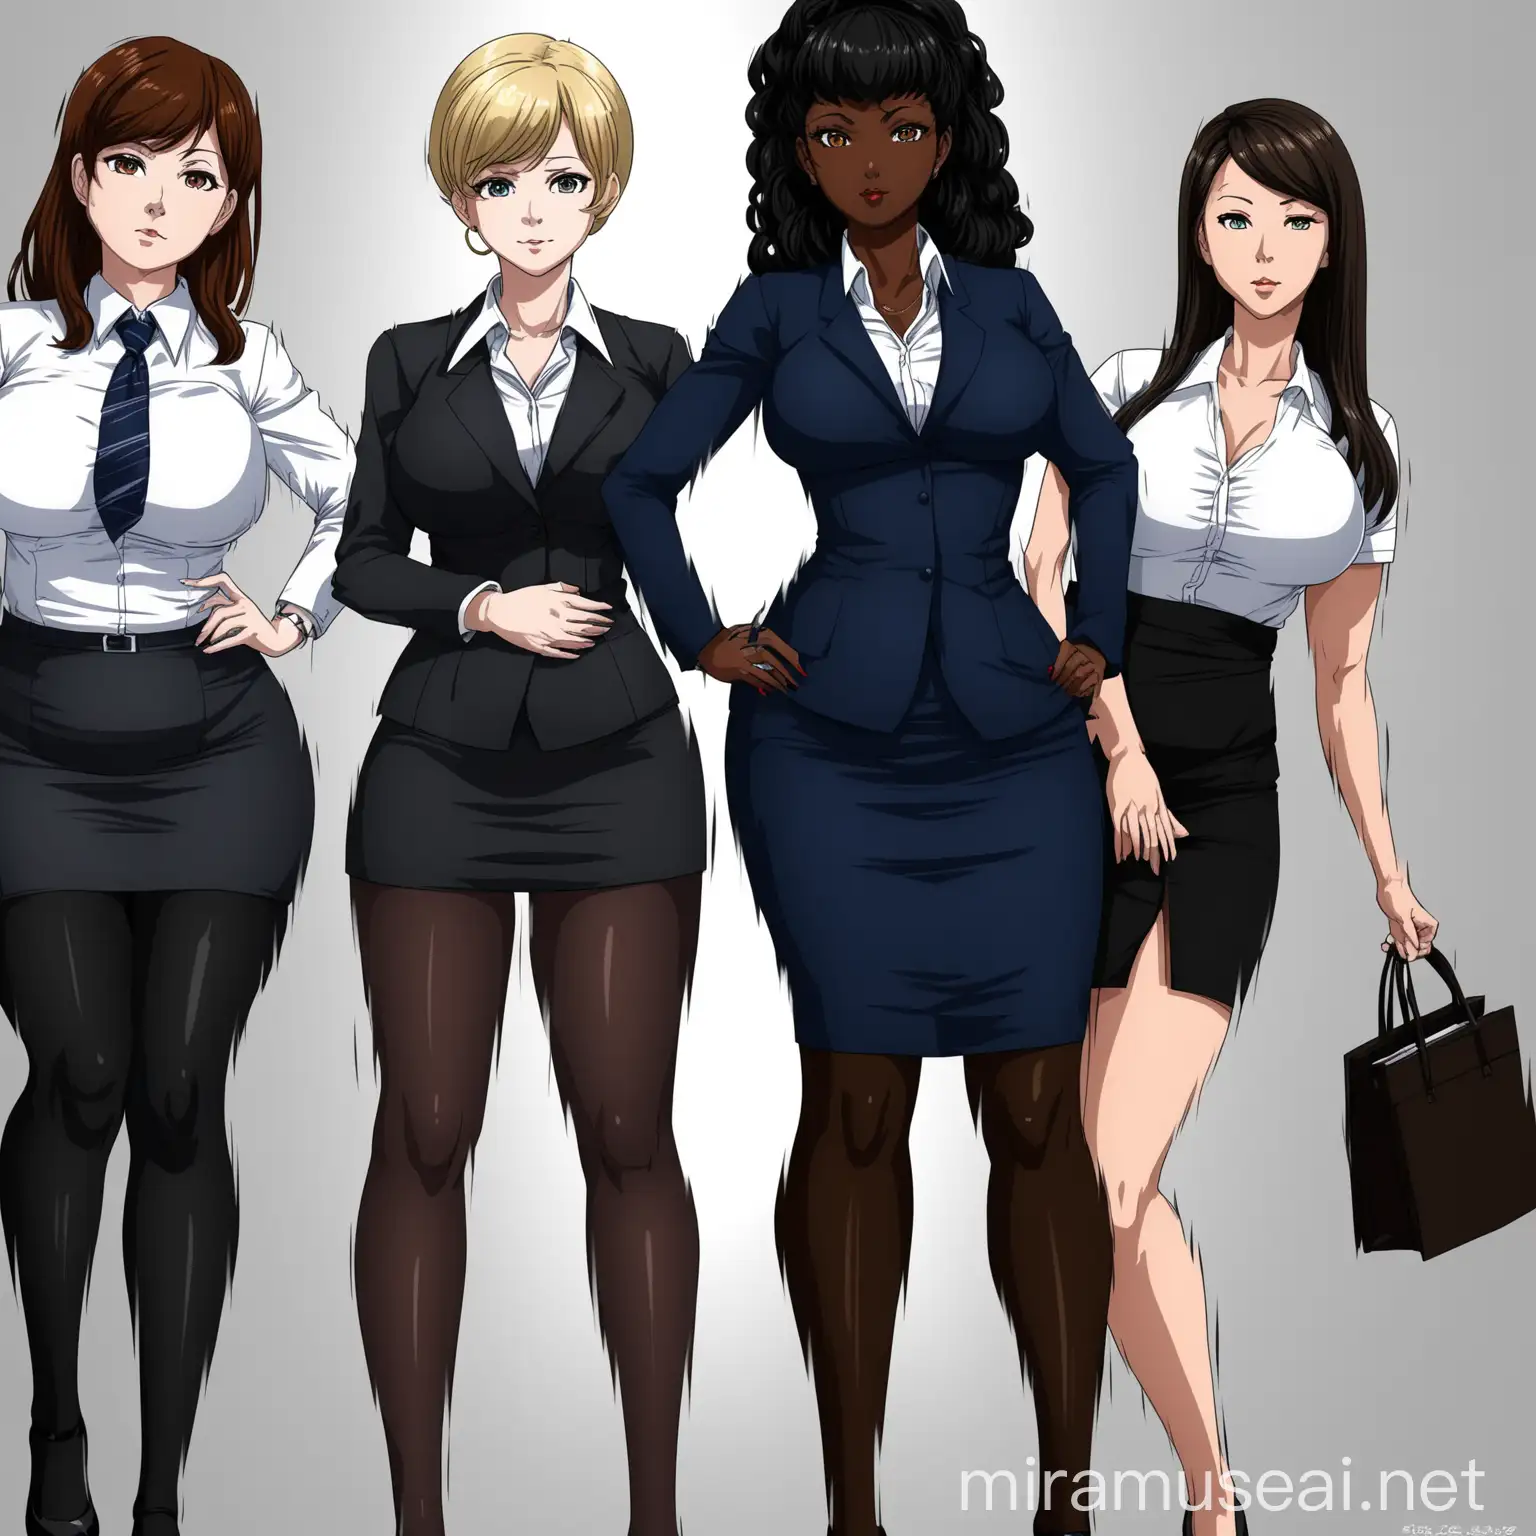 Office Women Diversity in Anime Style